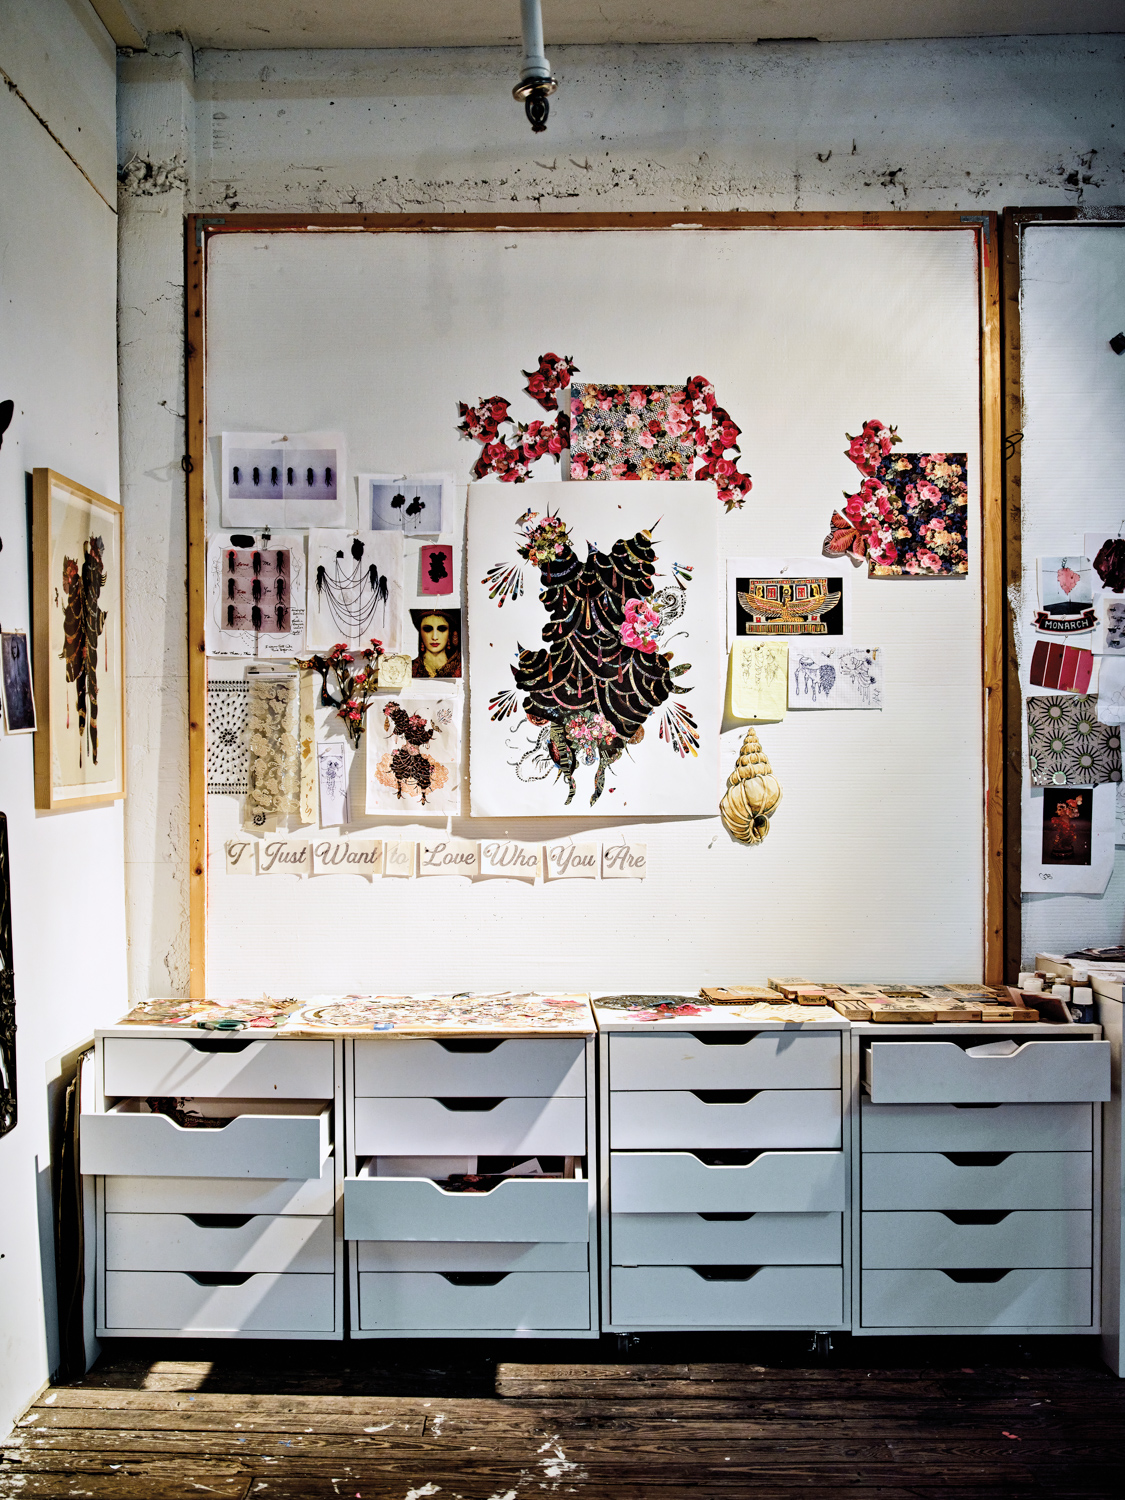 vignette of artwork and drawers in vickie pierre's studio